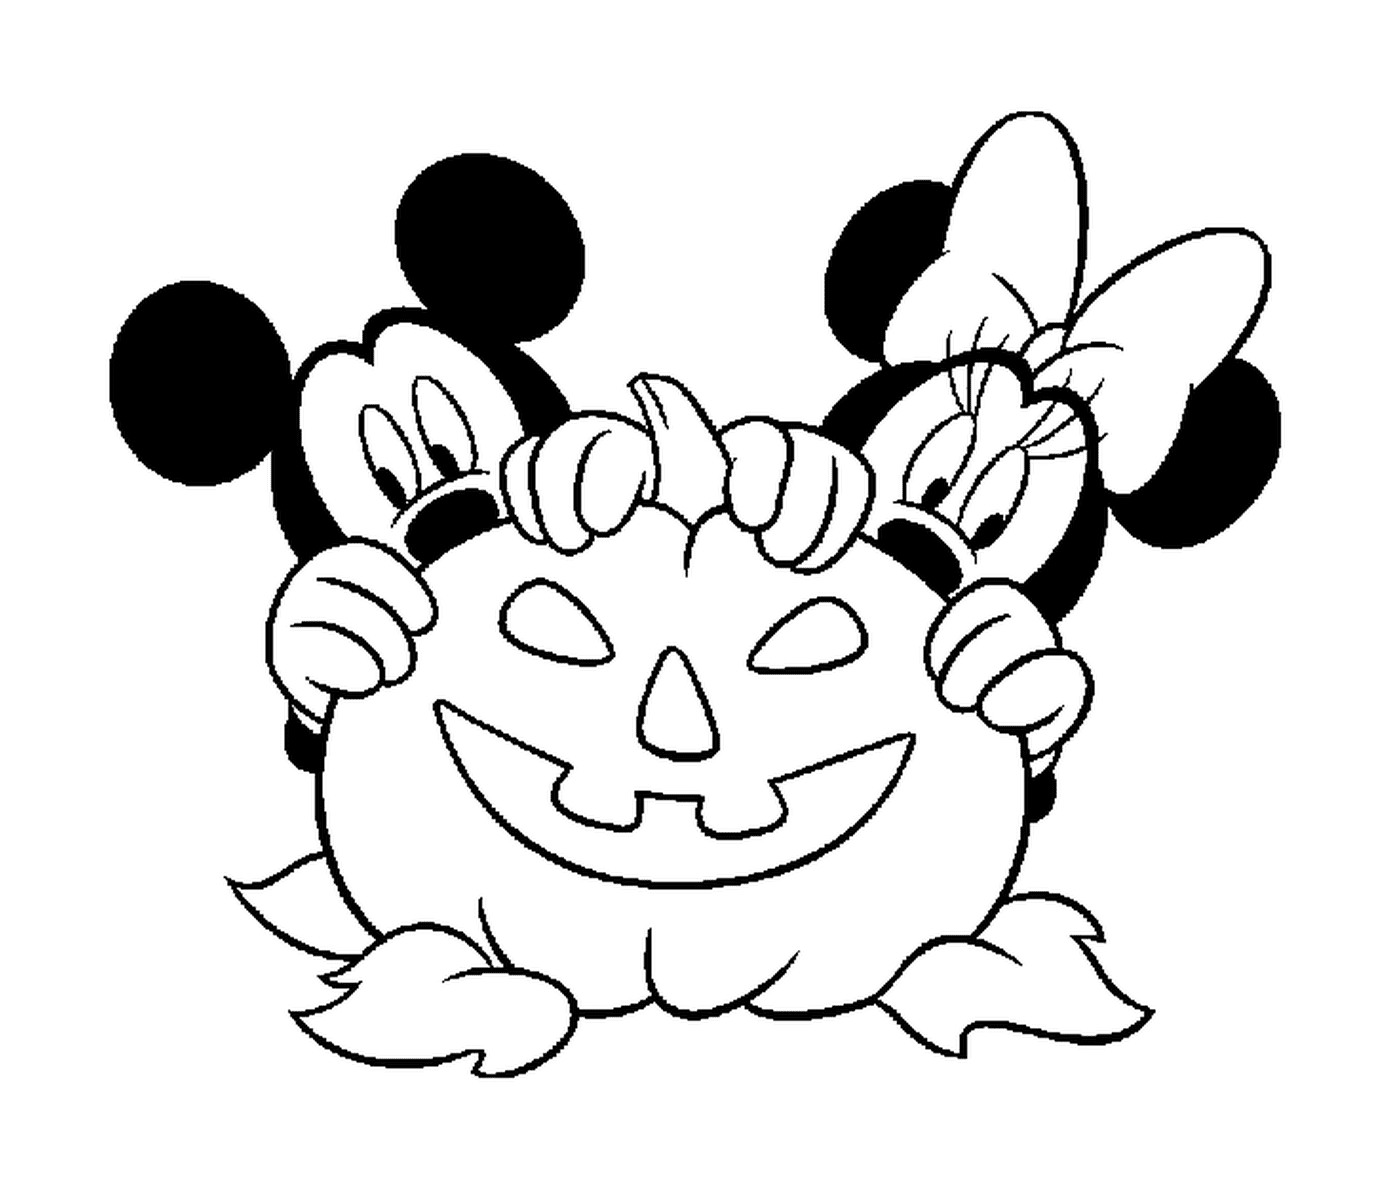  Mickey and Minnie hide behind a Disney pumpkin 